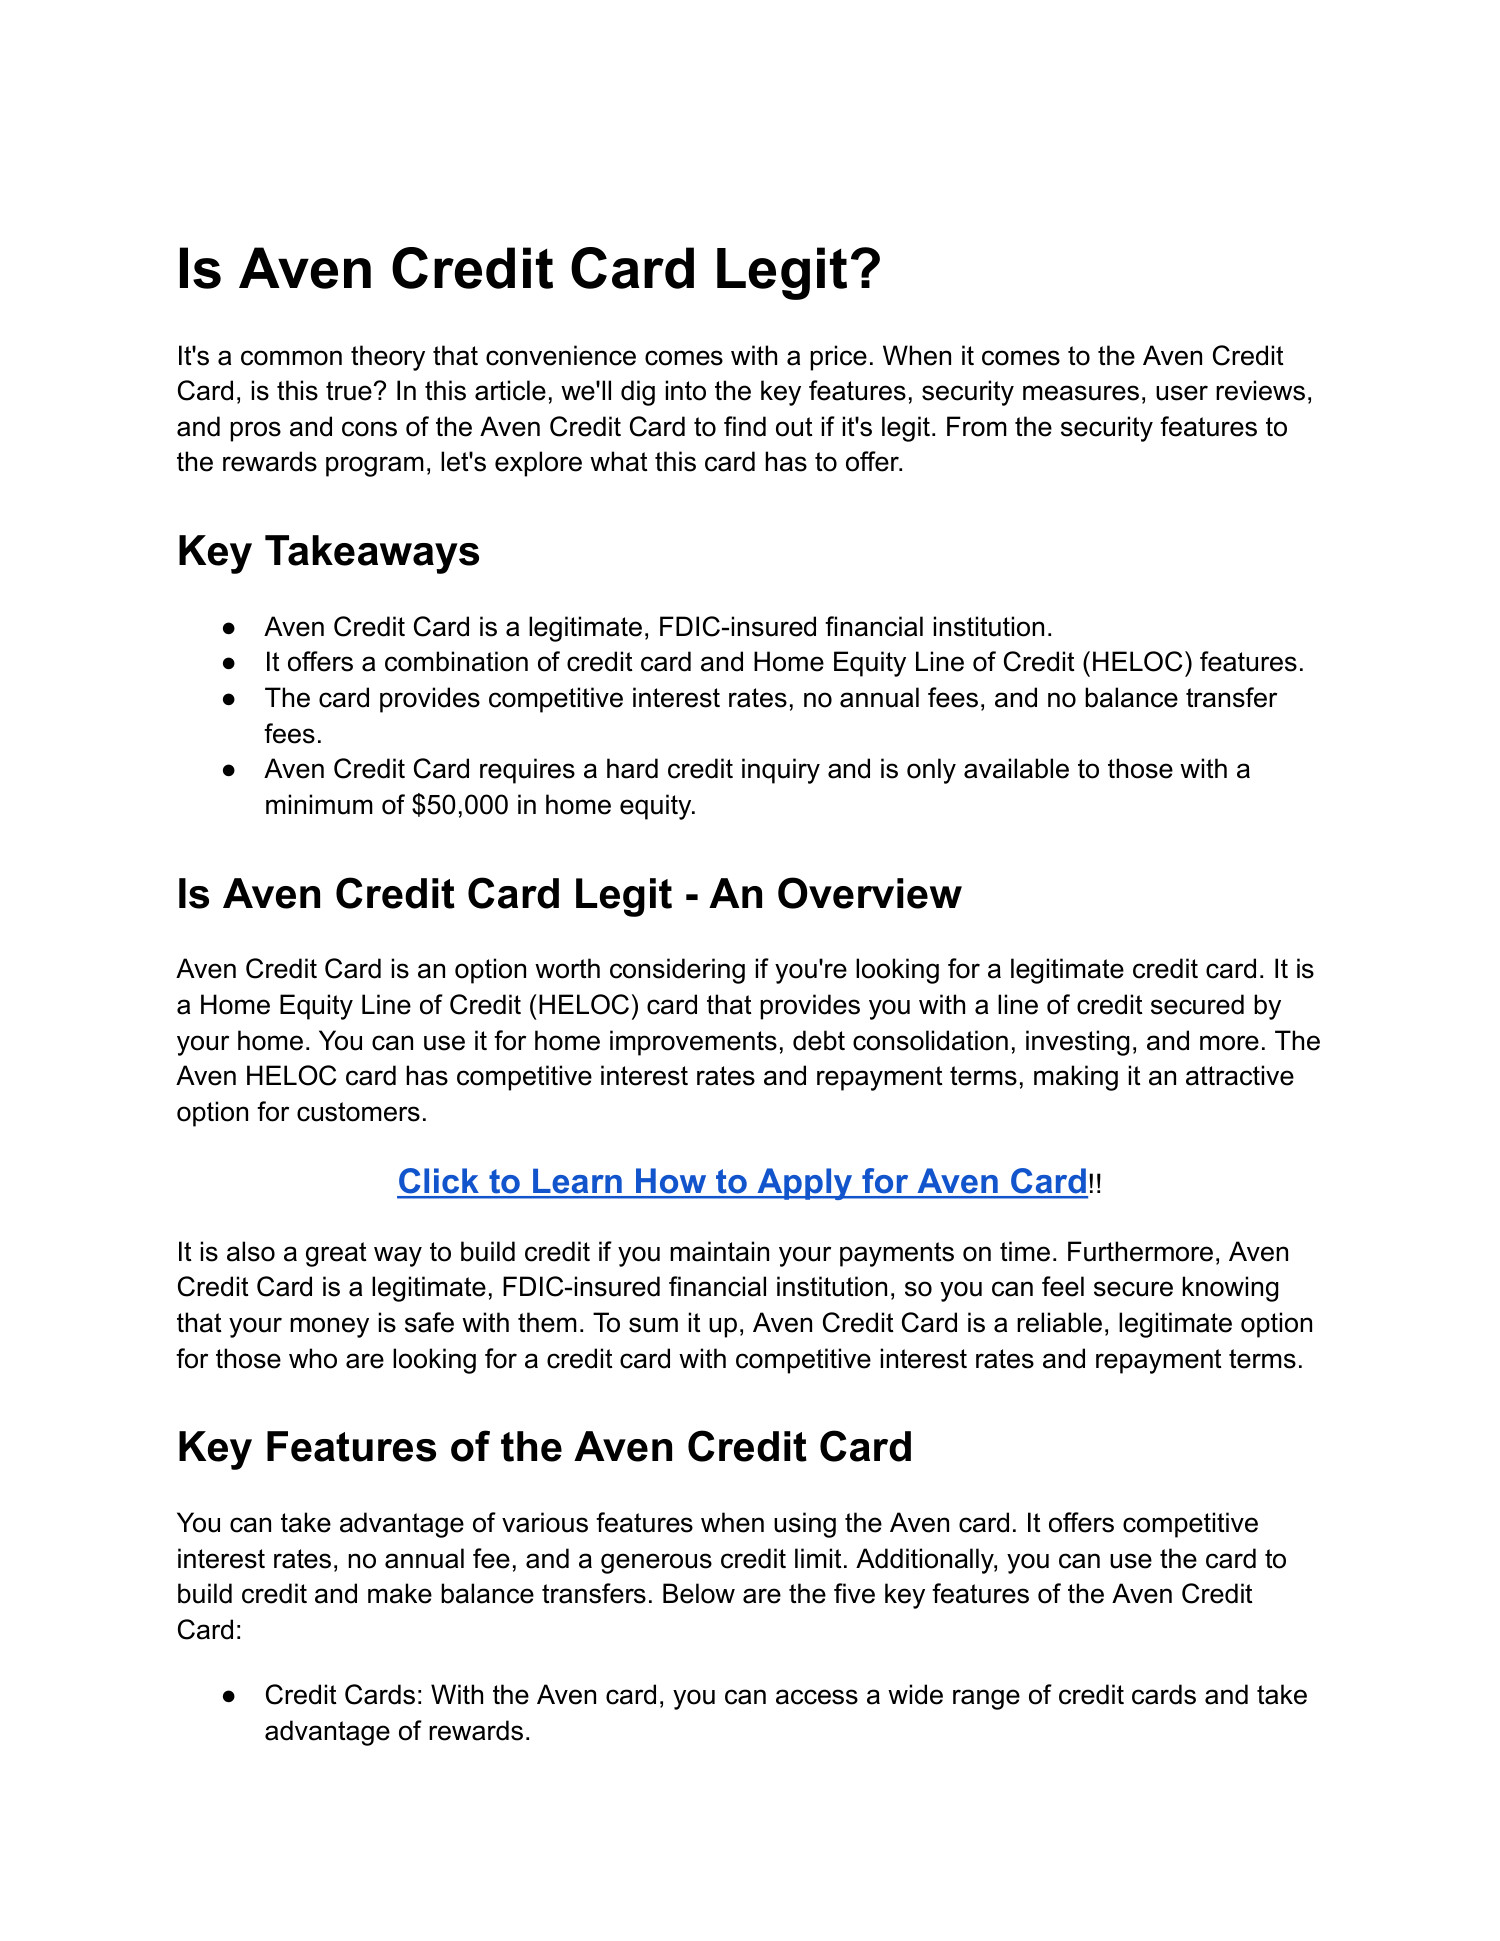 Credit card, Rewards, Interest Rates & Security